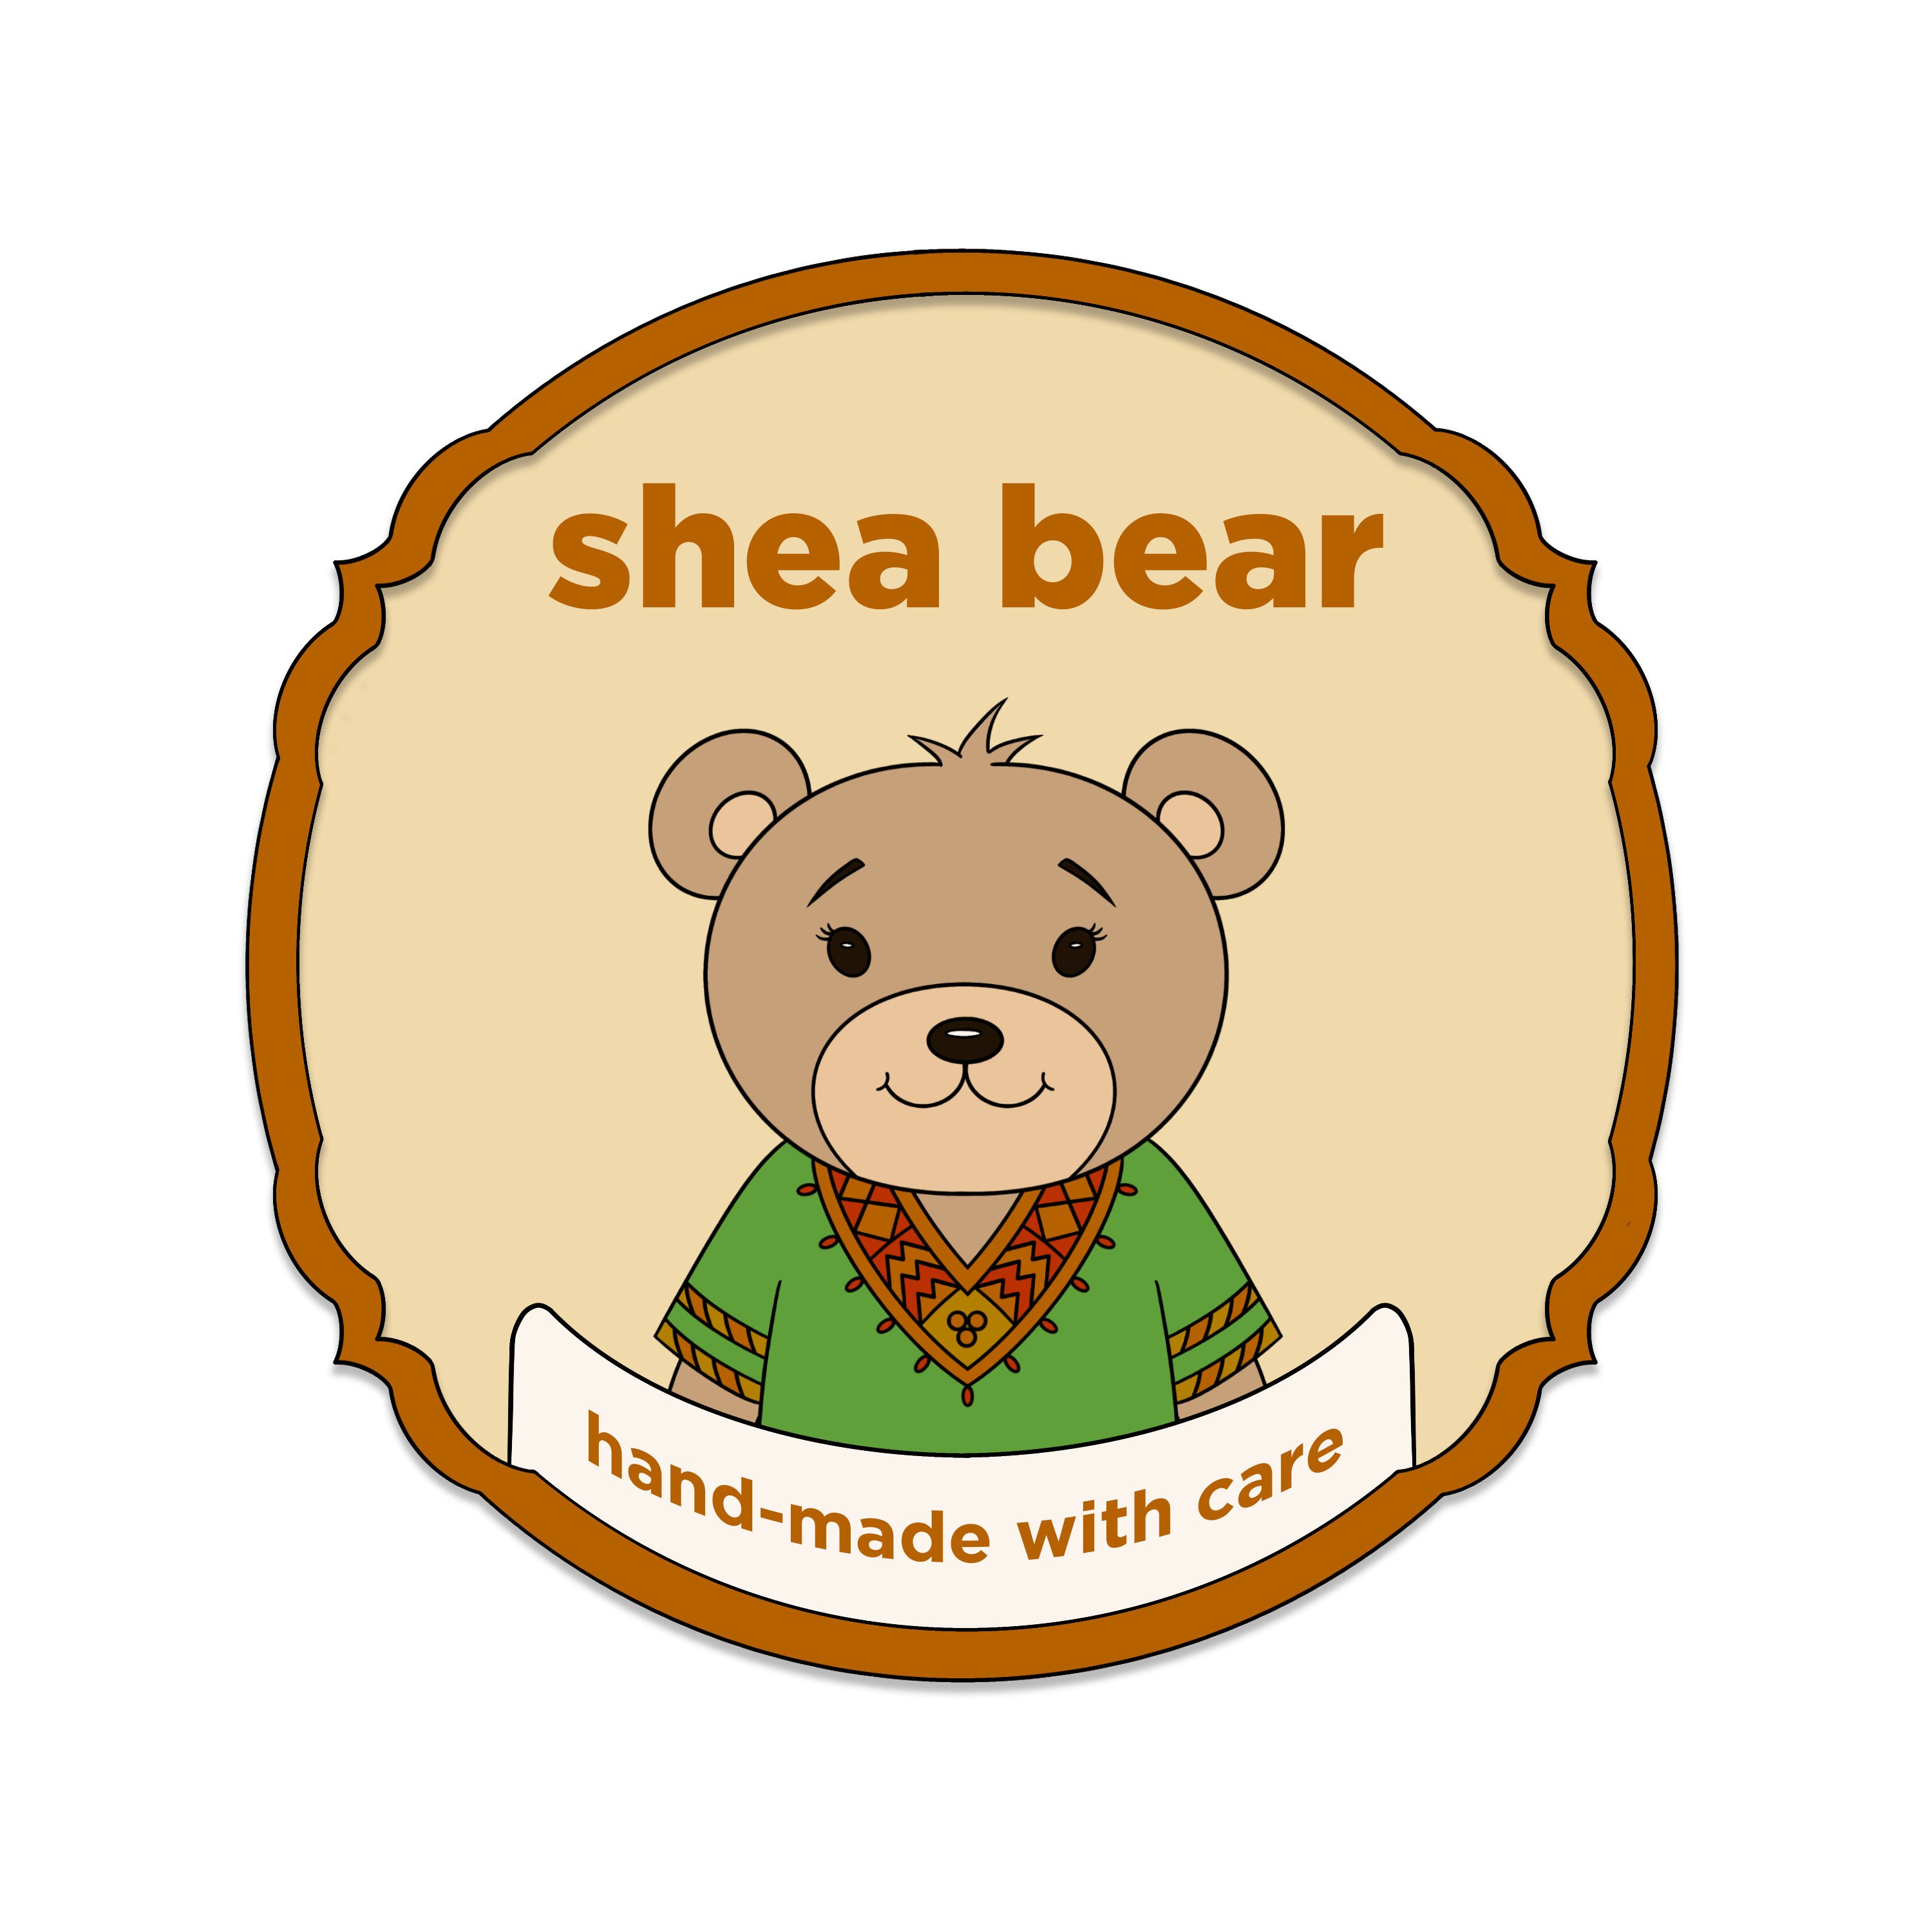 The Shea Bear Store